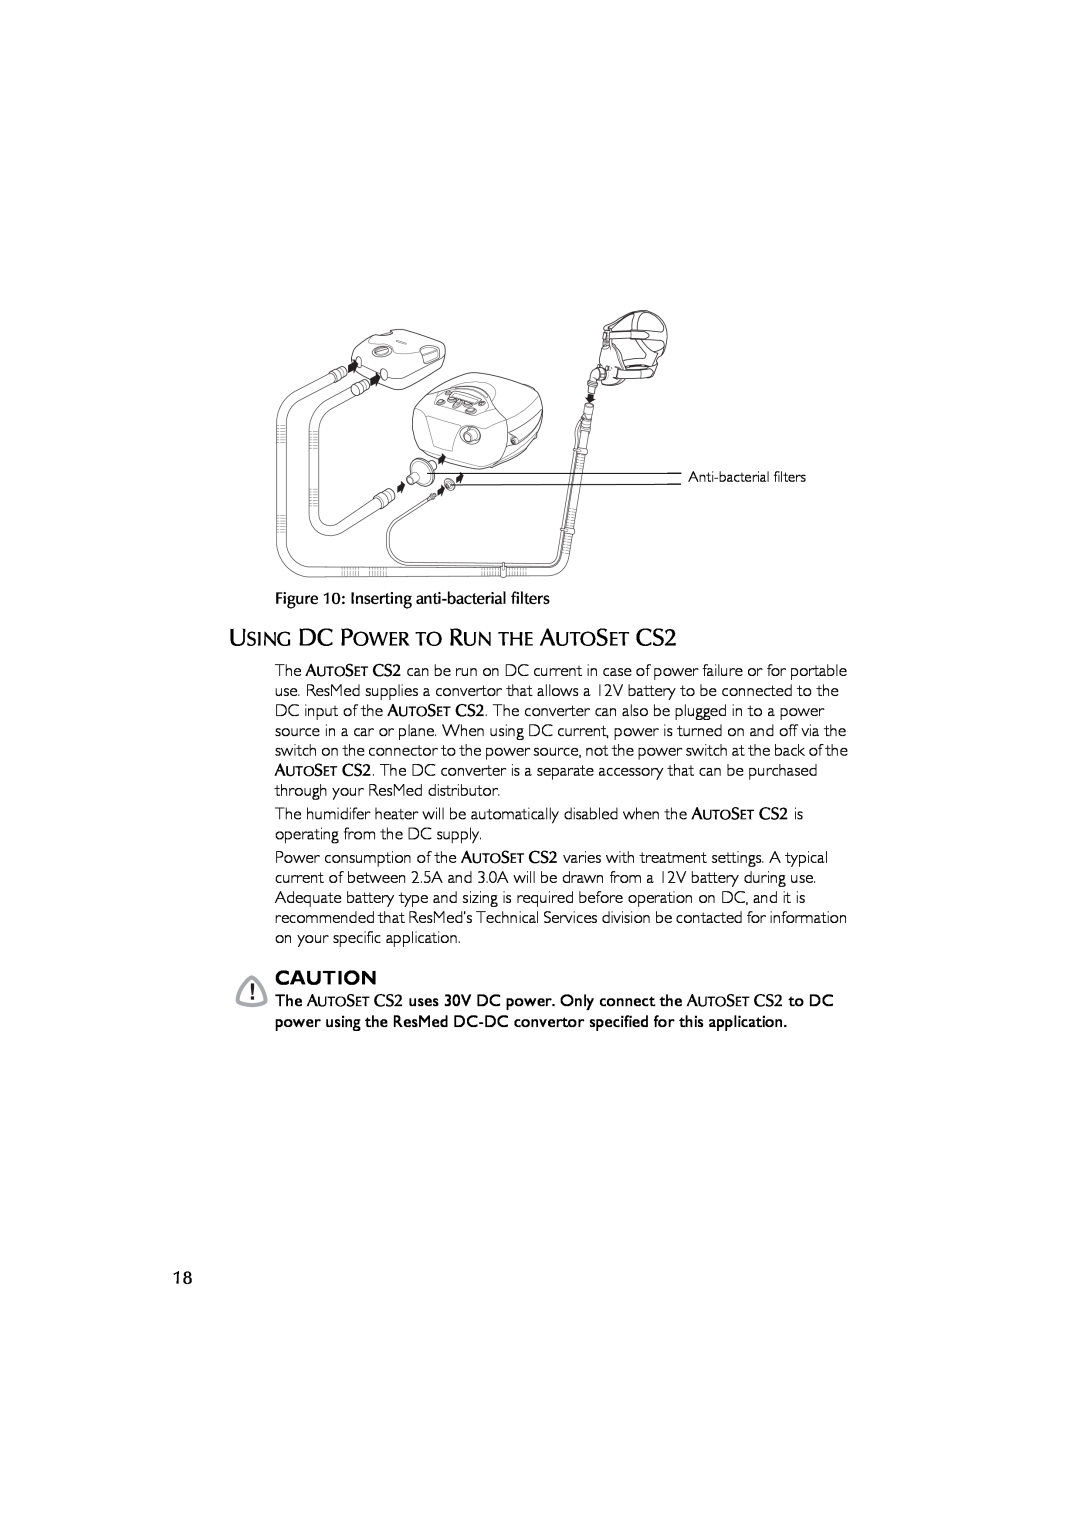 ResMed AutoSet CS 2 user manual USING DC POWER TO RUN THE AUTOSET CS2, Inserting anti-bacterial filters 